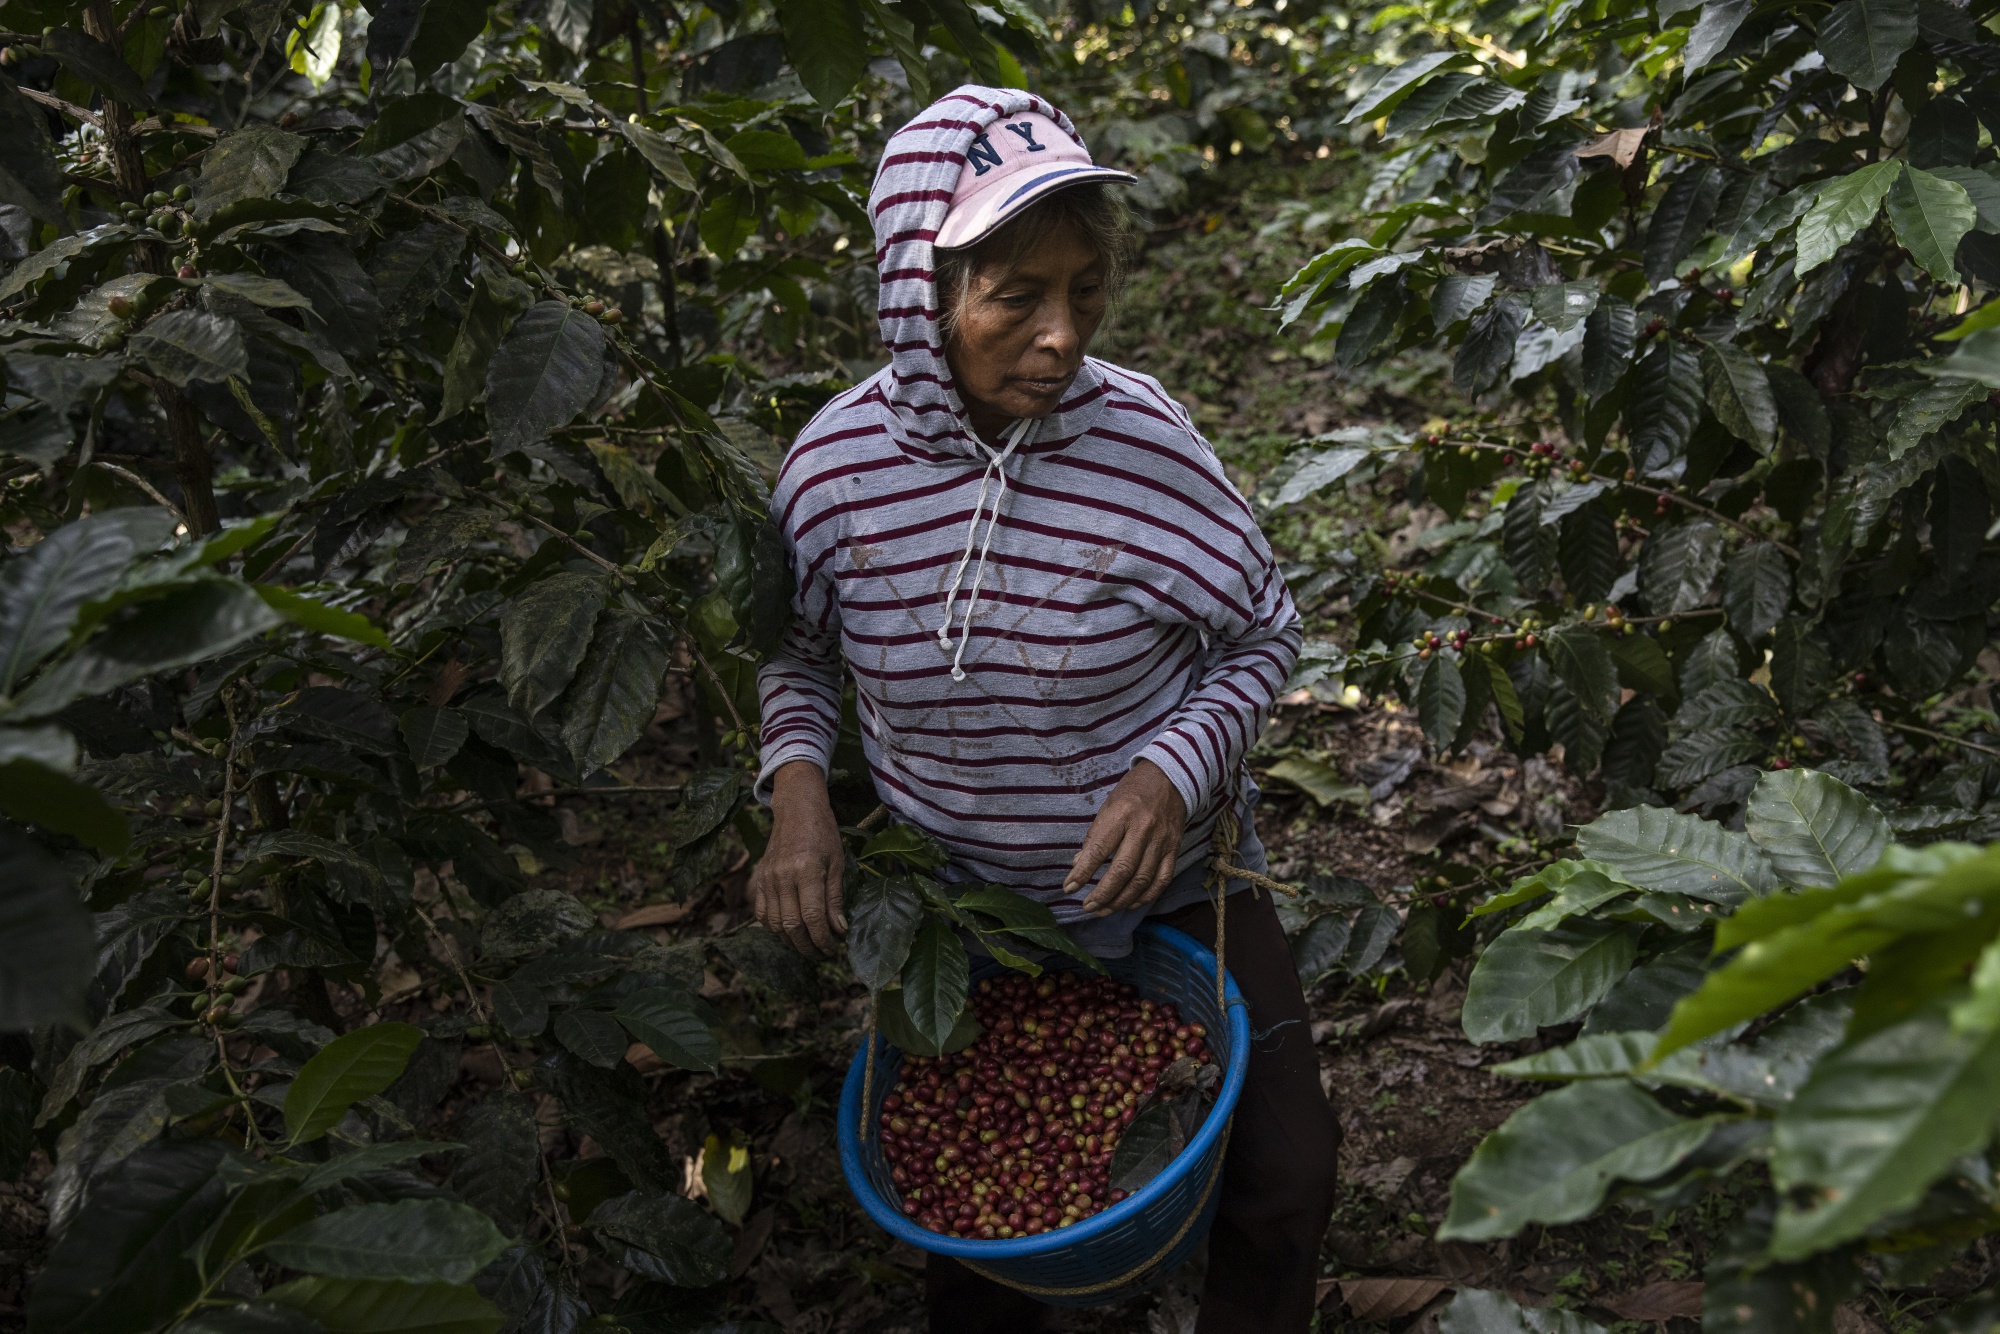 5 lb Bag of Coffee - Little Guatemala